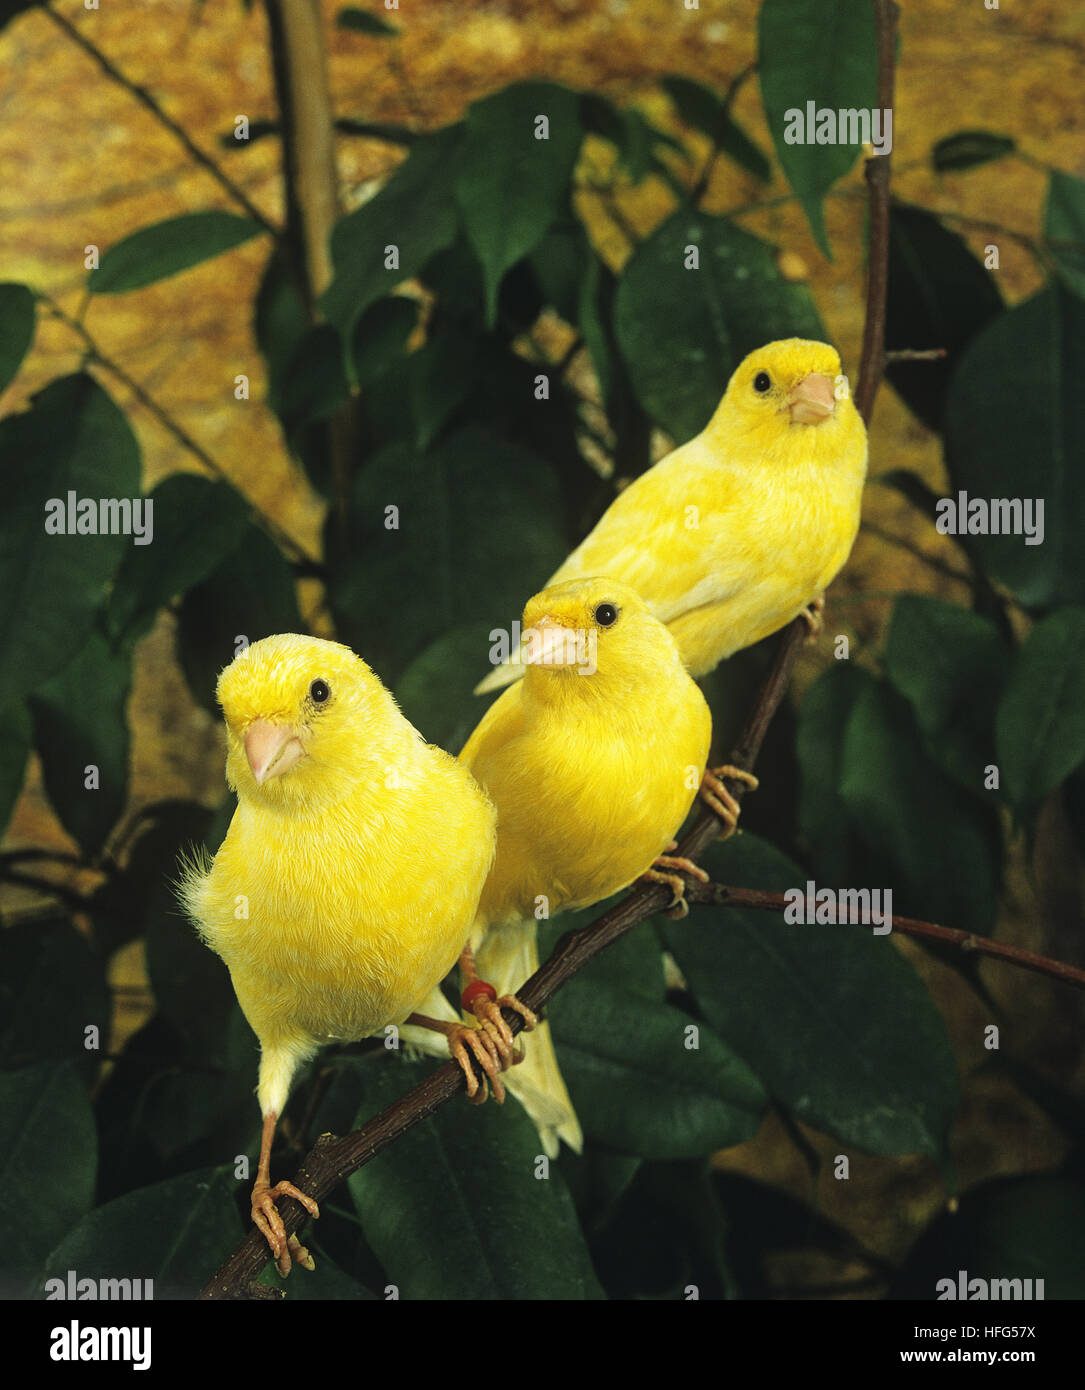 Yellow Canary, serinus canaria Stock Photo